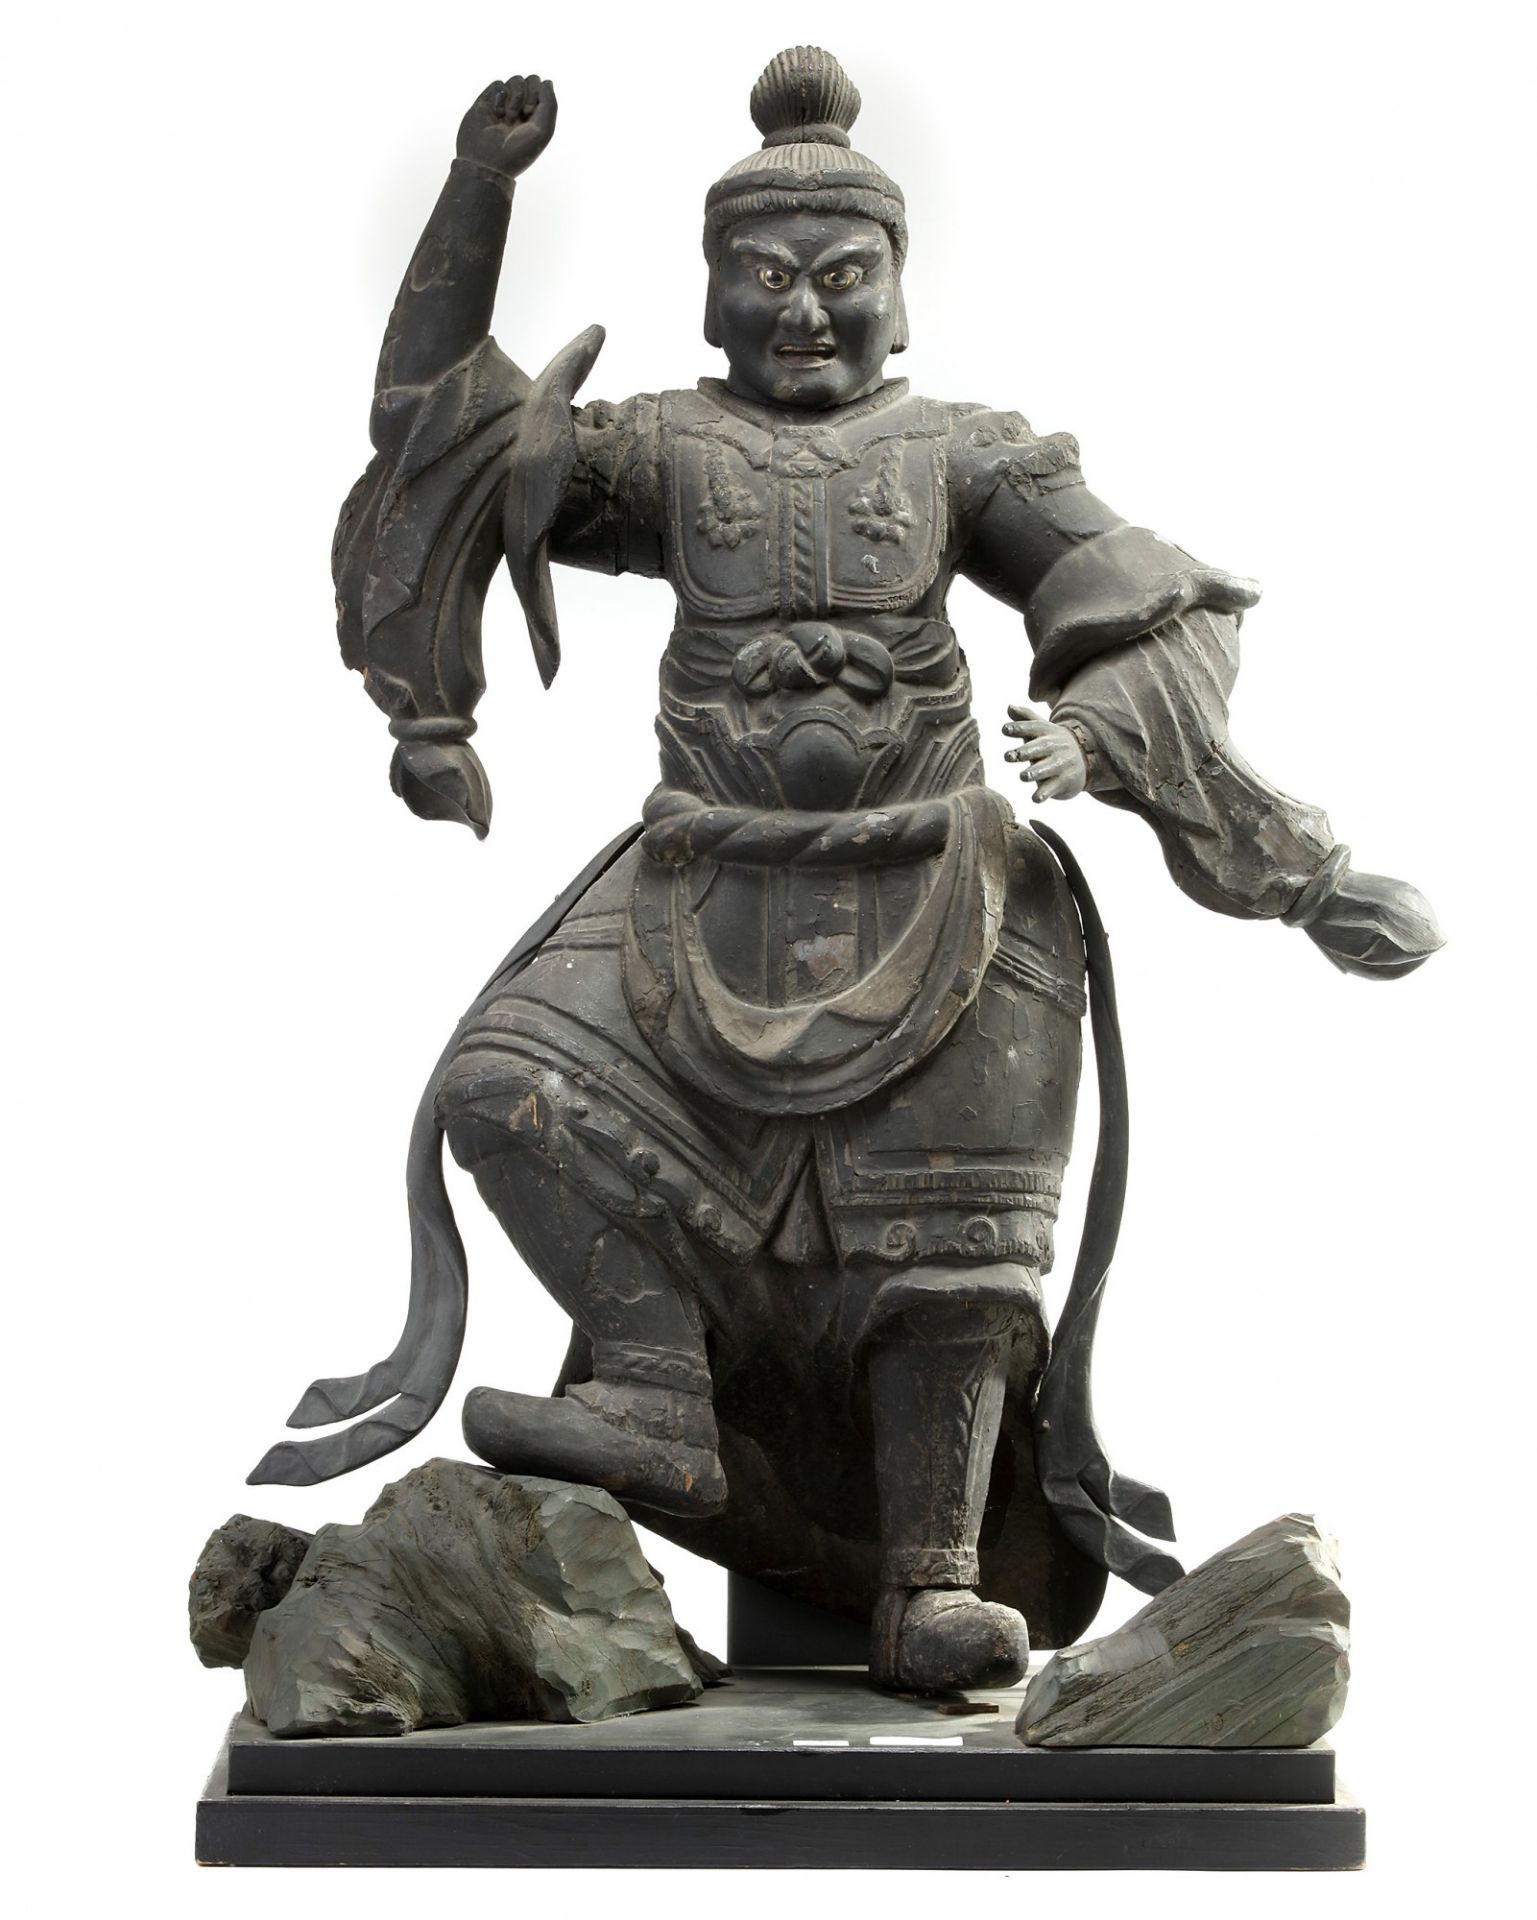 Wooden figure depicting the guardian deity Bishamon